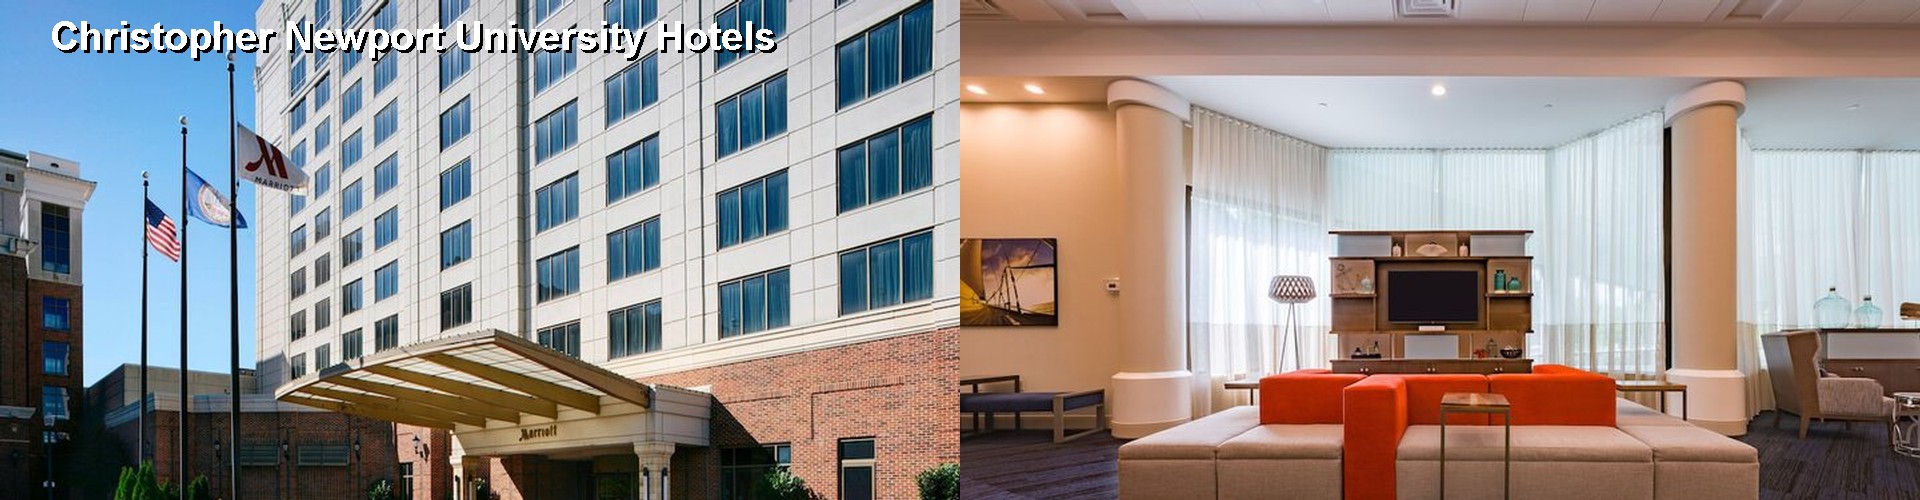 5 Best Hotels near Christopher Newport University